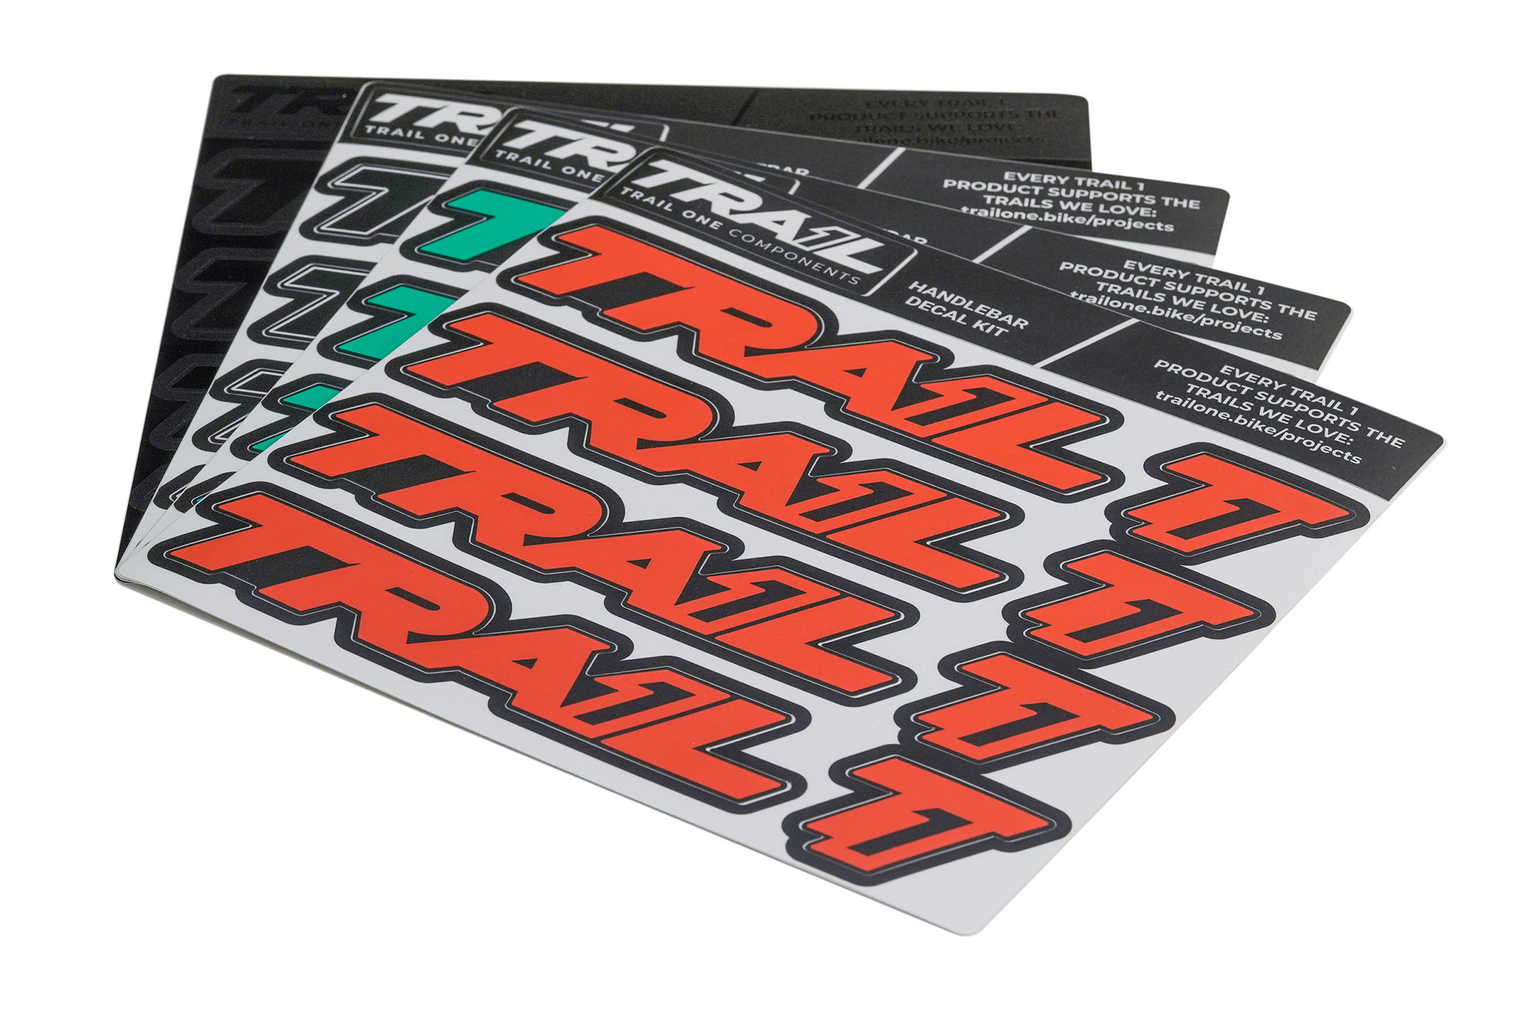 Trail One Components Crockett Handlebar Decal Kit - Orange MPN: 0018-5 Sticker/Decal Crockett Handlebar Decal Kit